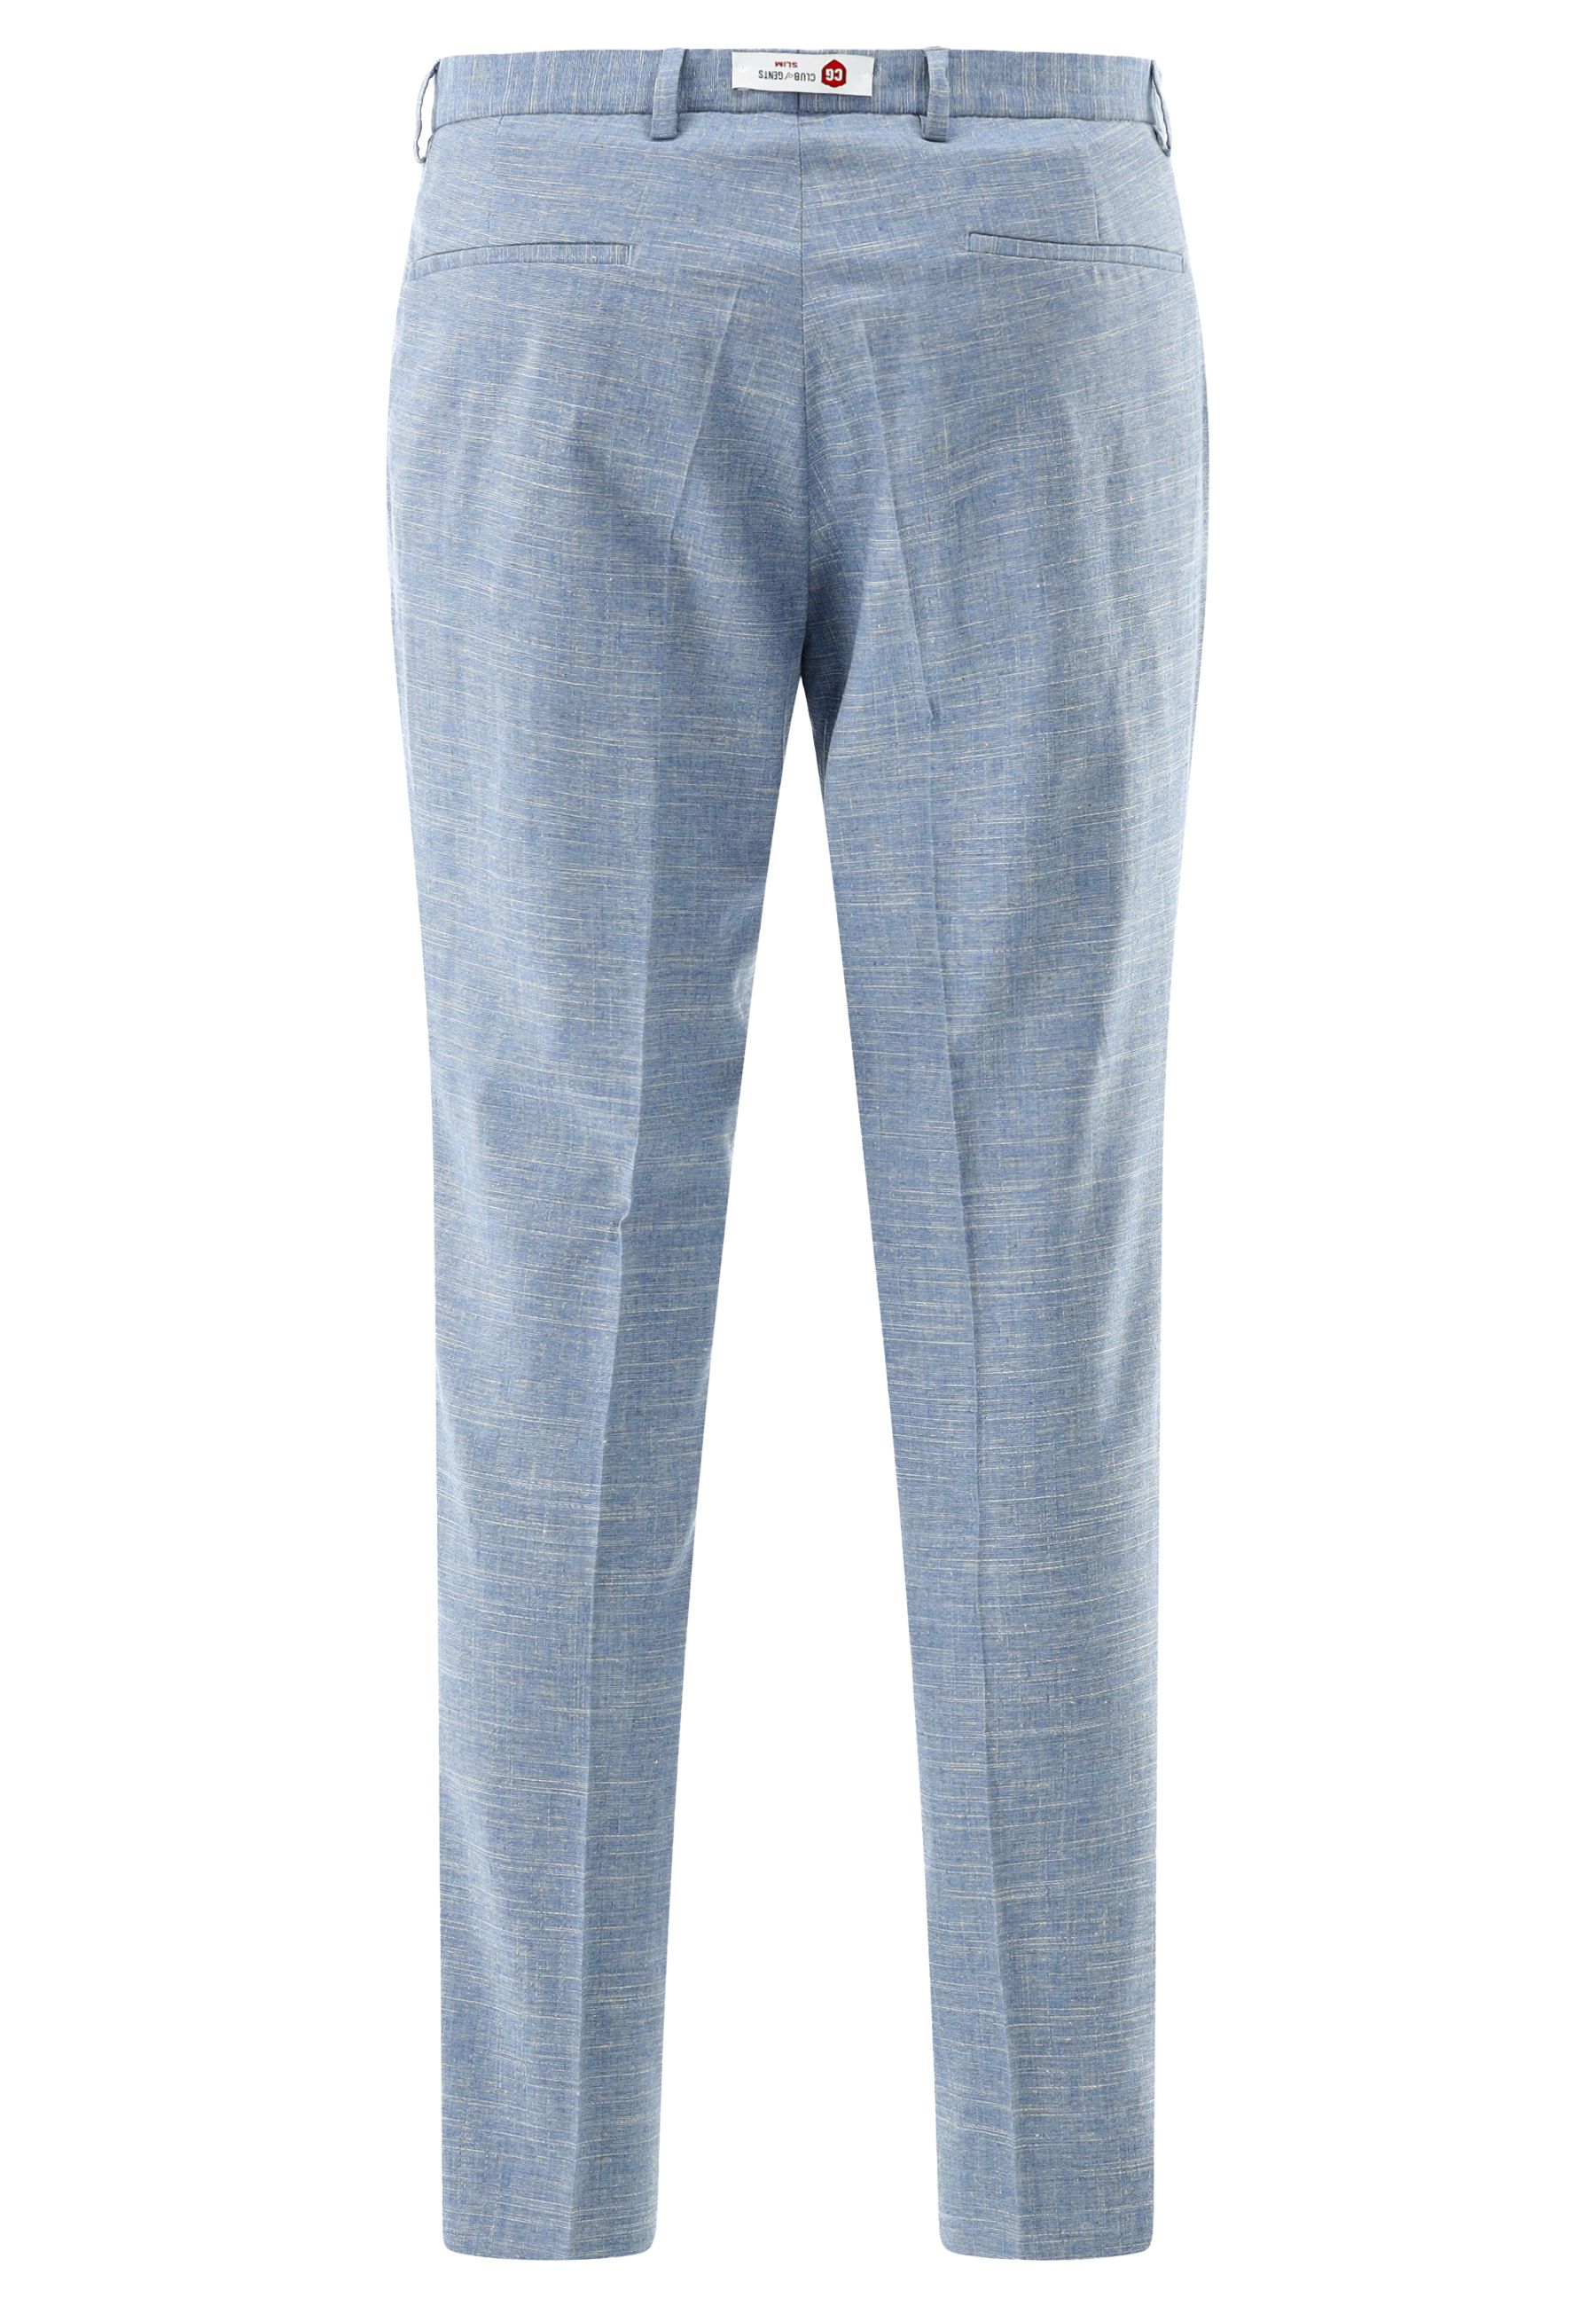 Pantalons Blauw 20.170s0 61 Paco